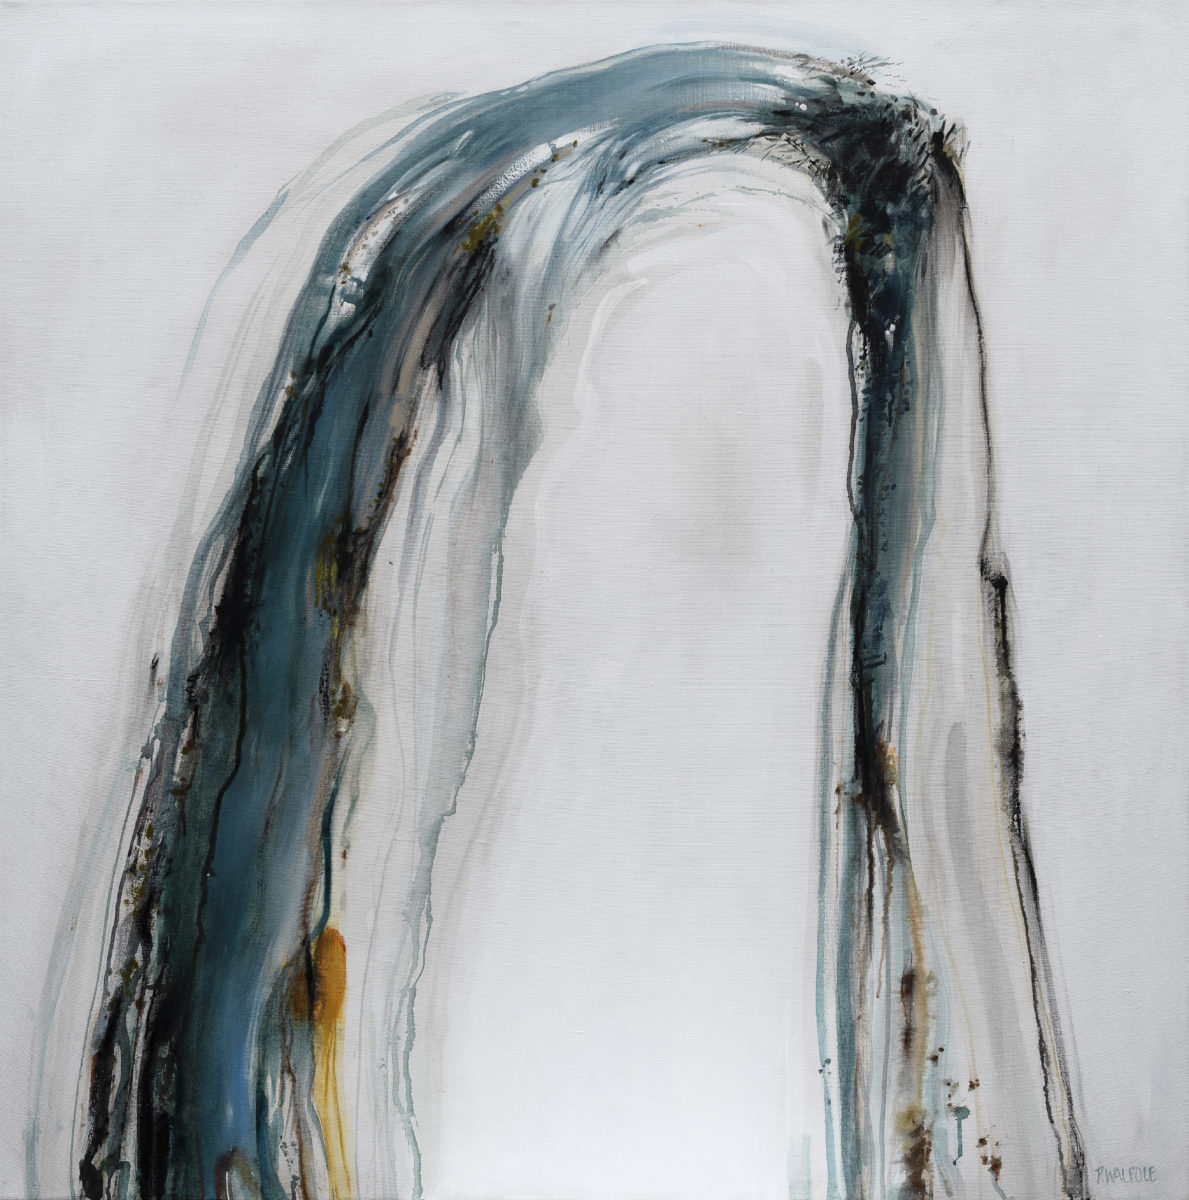 River Bend II | Pam Walpole | Mixed media on canvas | 137 x 137 cm | $5000